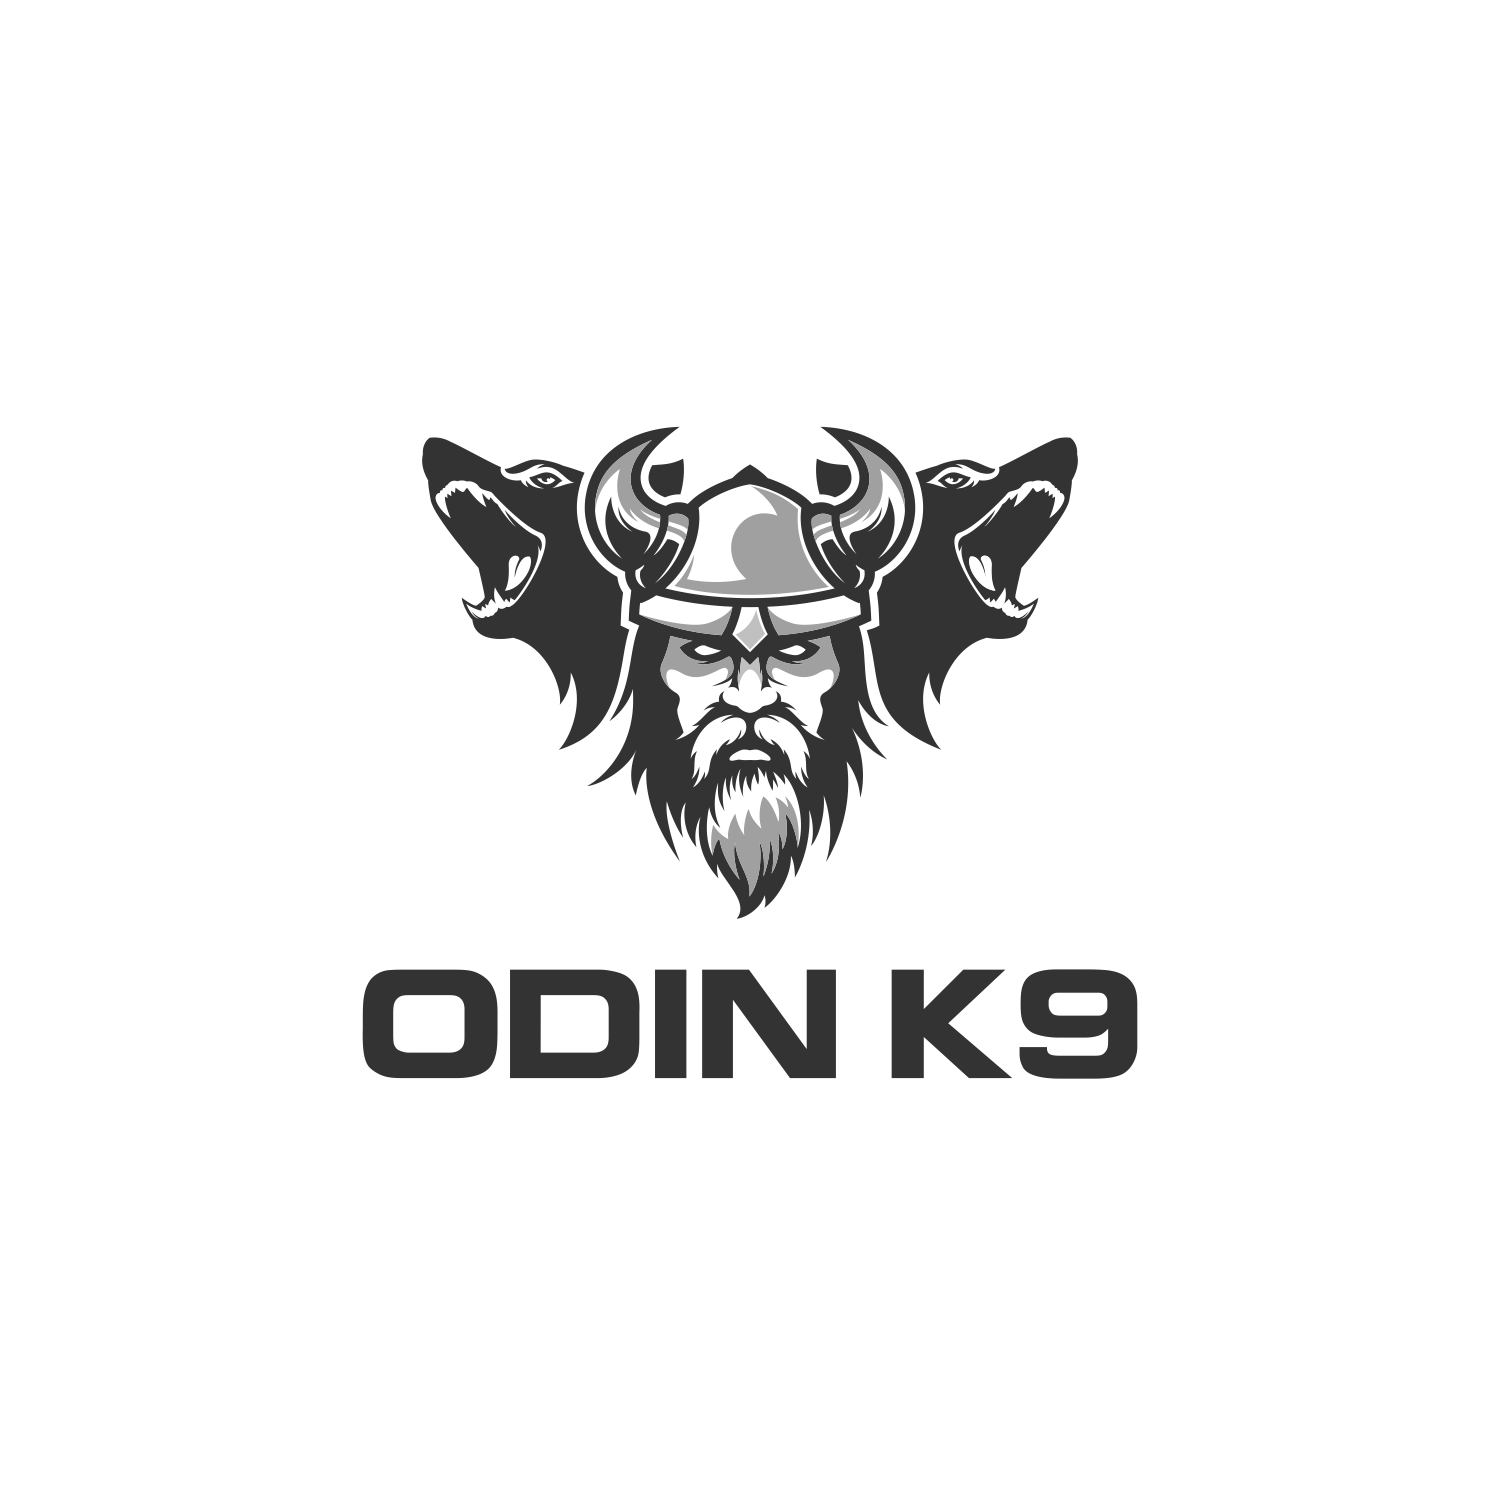 K9 Logo - Serious, Modern, Dog Training Logo Design for ODIN K9 by tyo ...